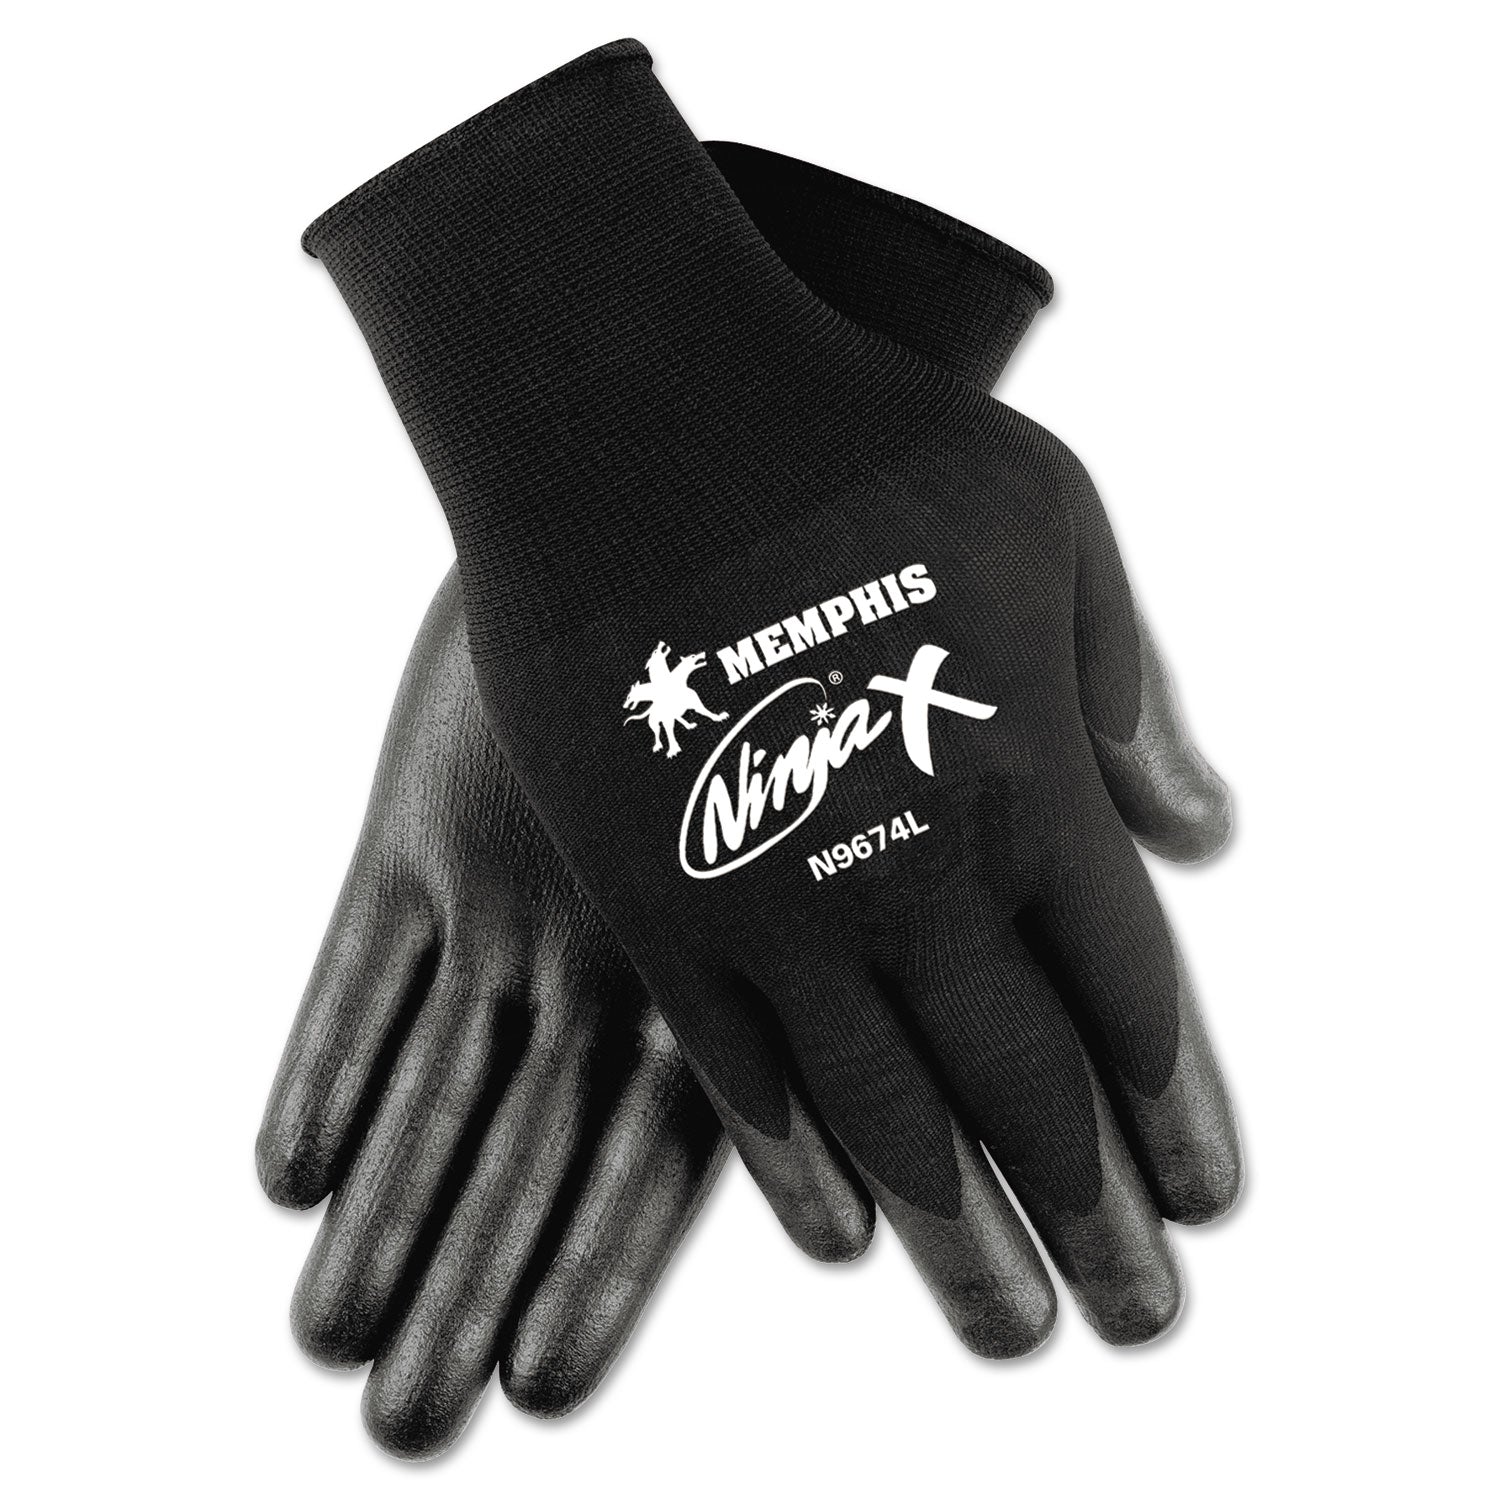 Ninja x Bi-Polymer Coated Gloves, Small, Black, Pair - 